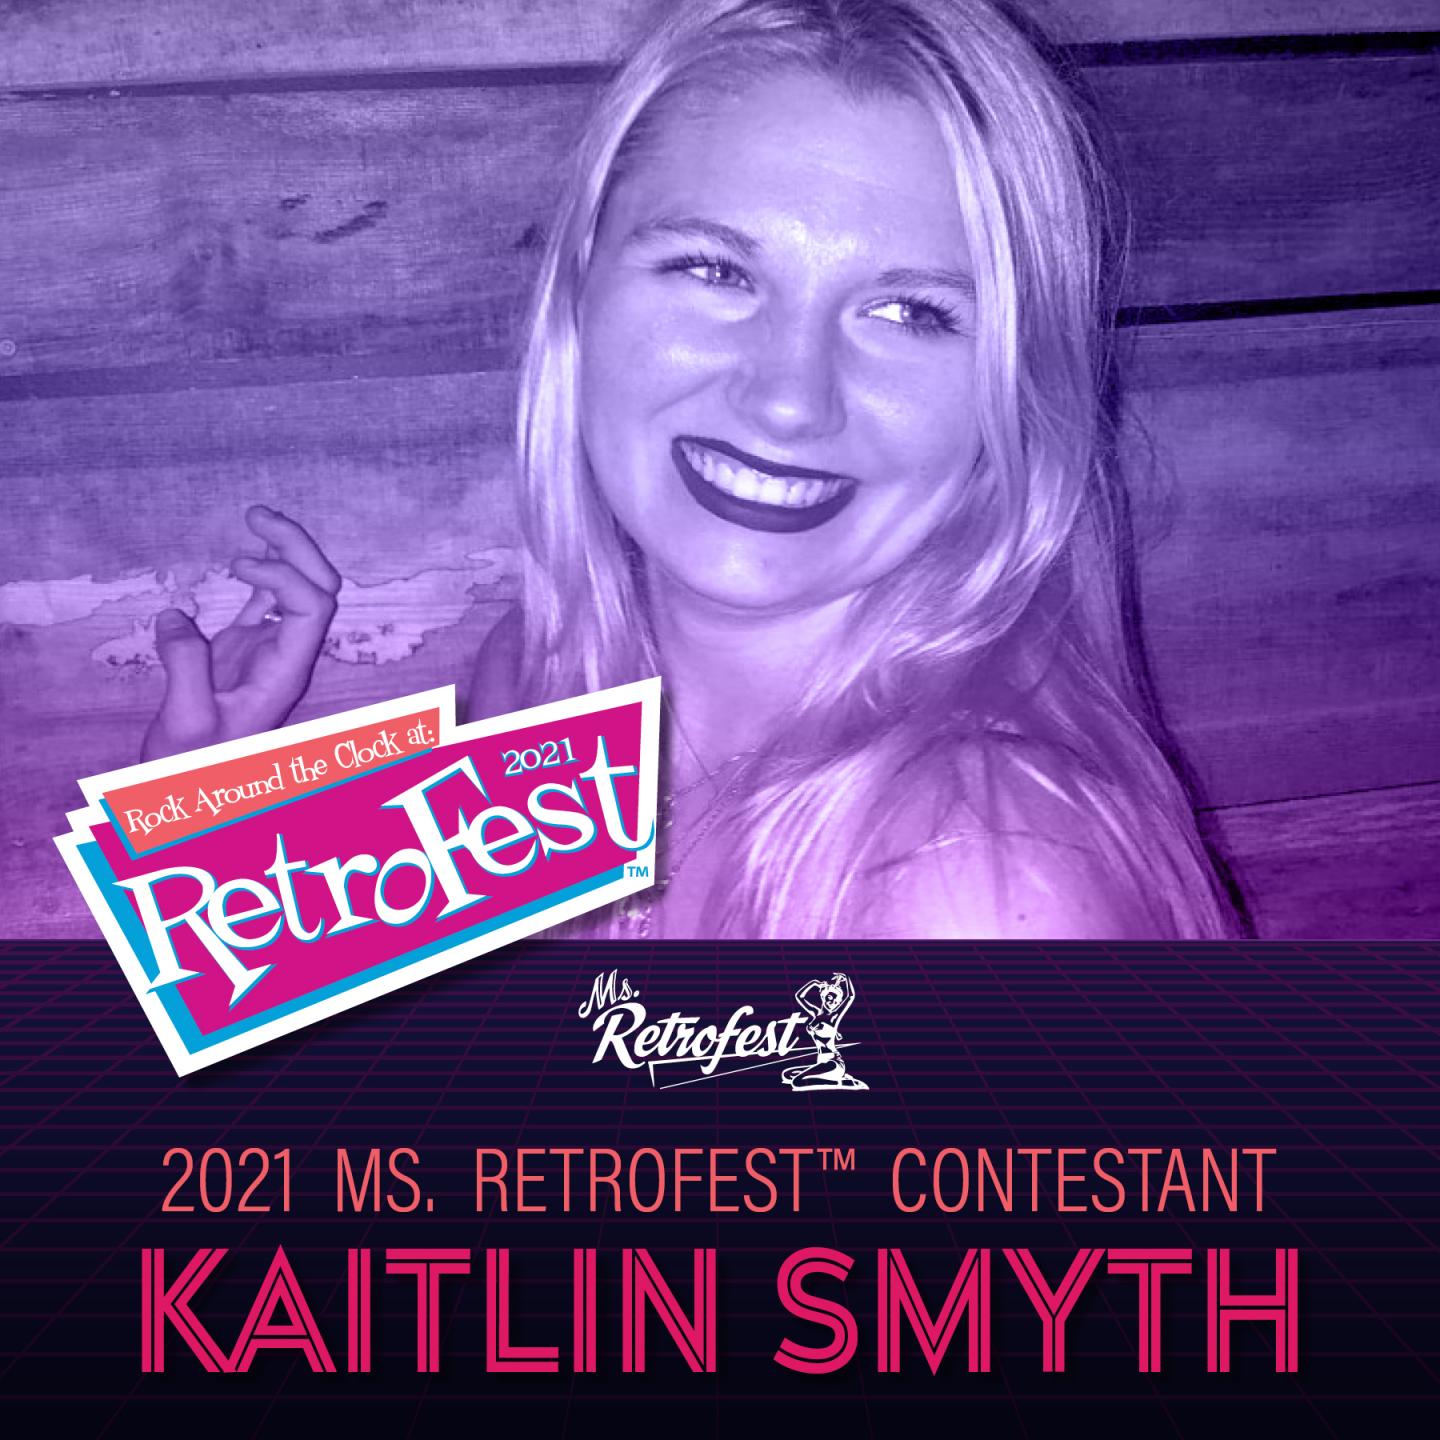 Ms. RetroFest - Instagram-Kaitlin